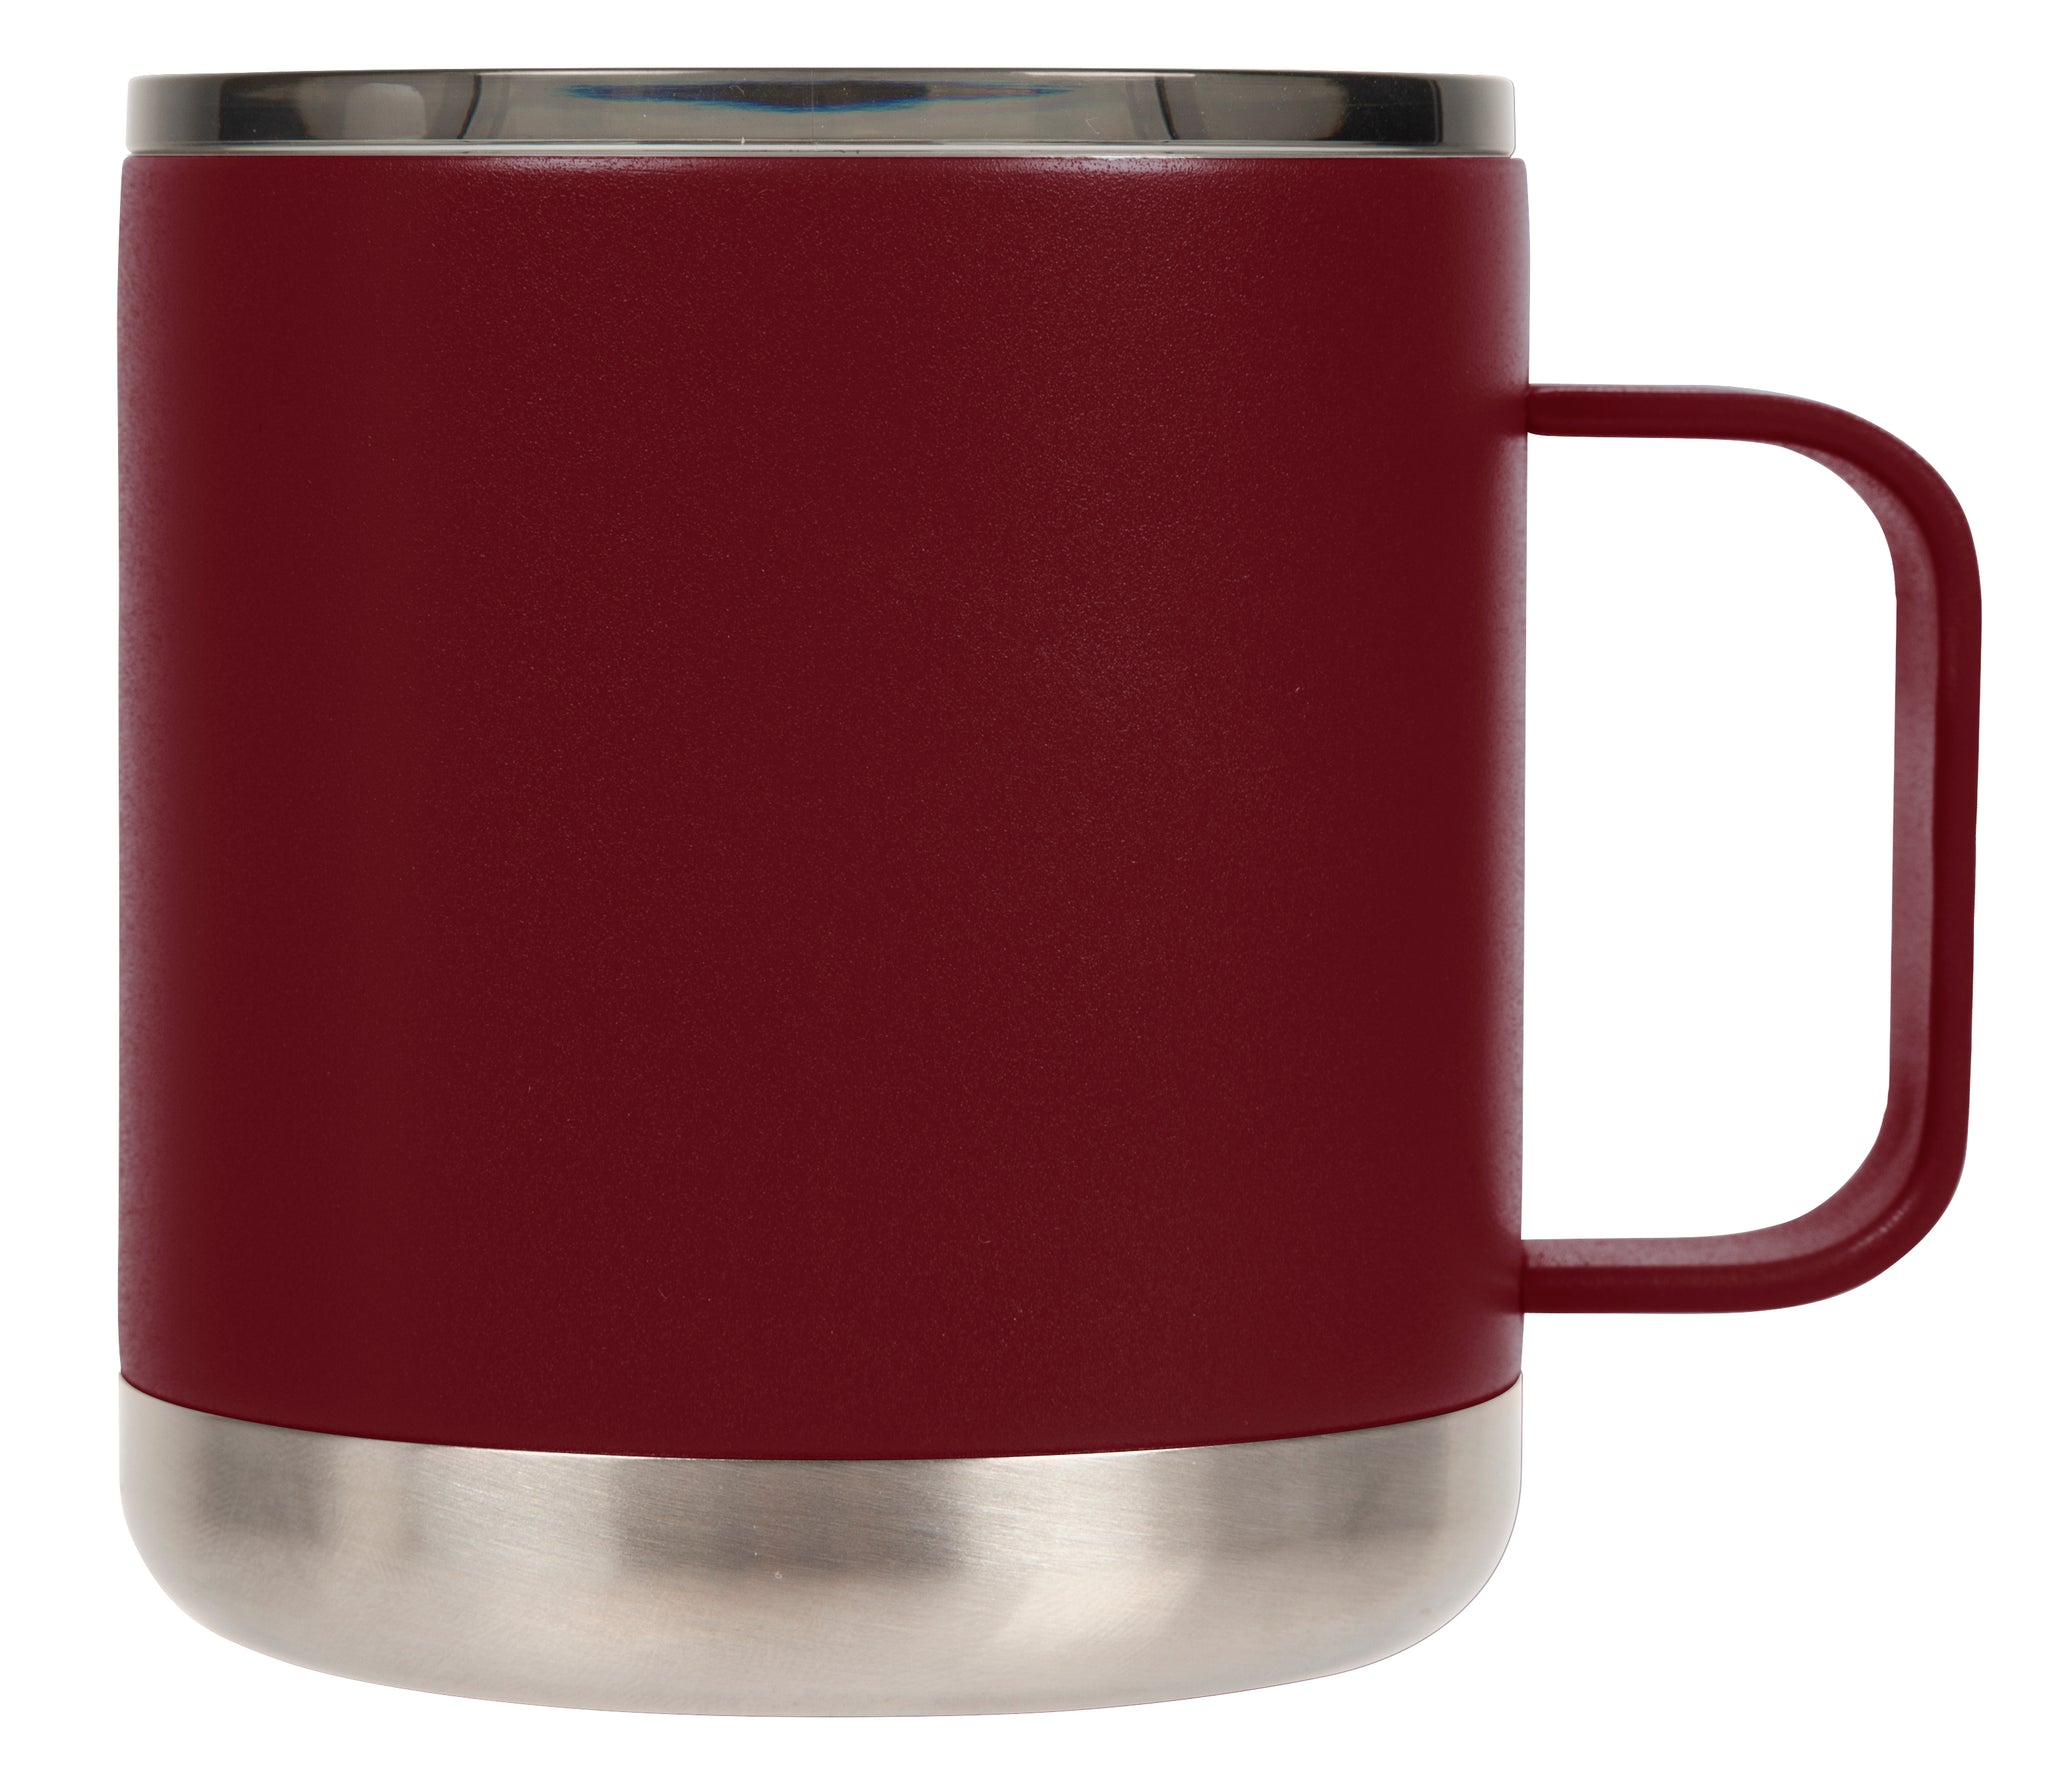 Stainless Steel Coffee Mug With Lid, Insulated Coffee Mug With